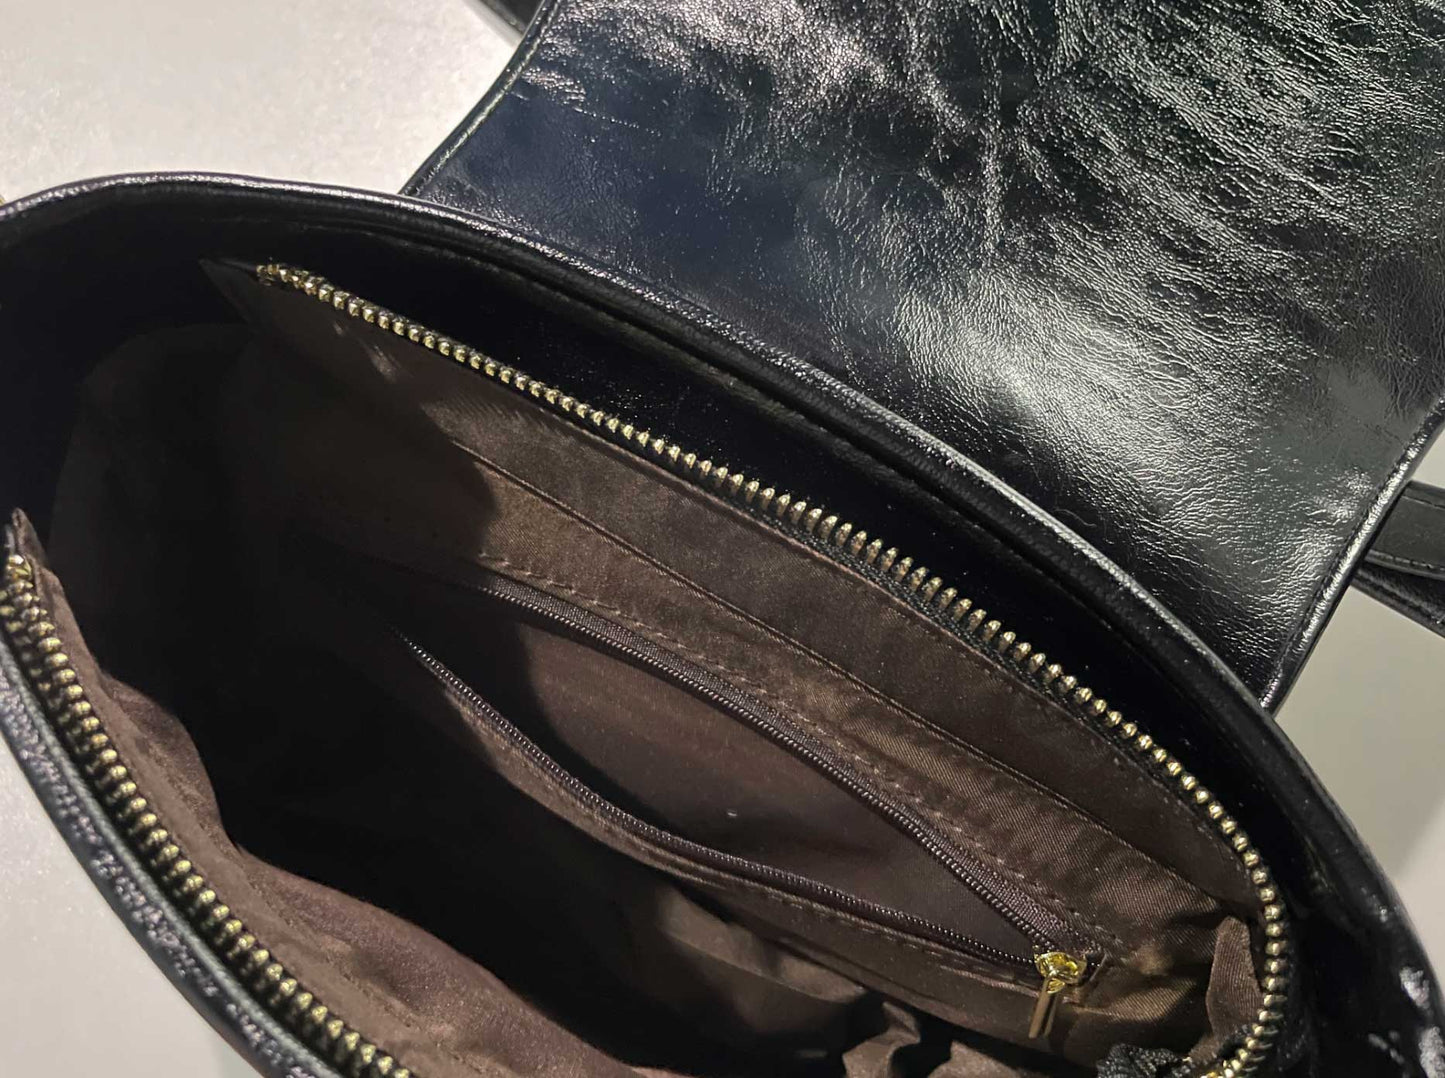 Astrology witch Vegan leather saddle bag